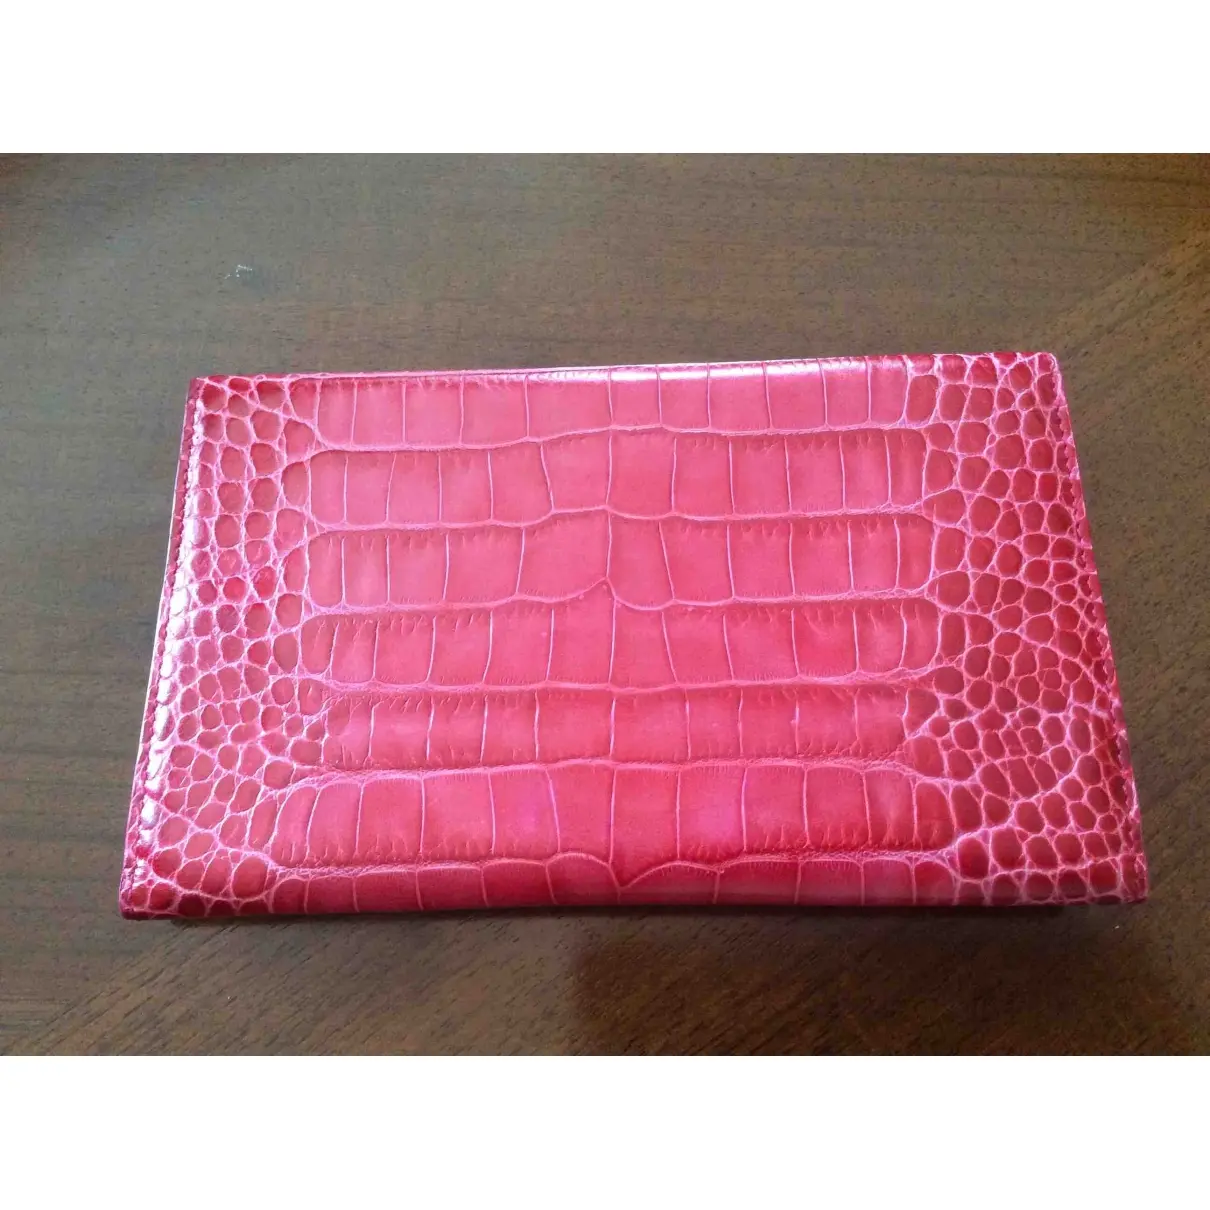 Smythson Leather purse for sale